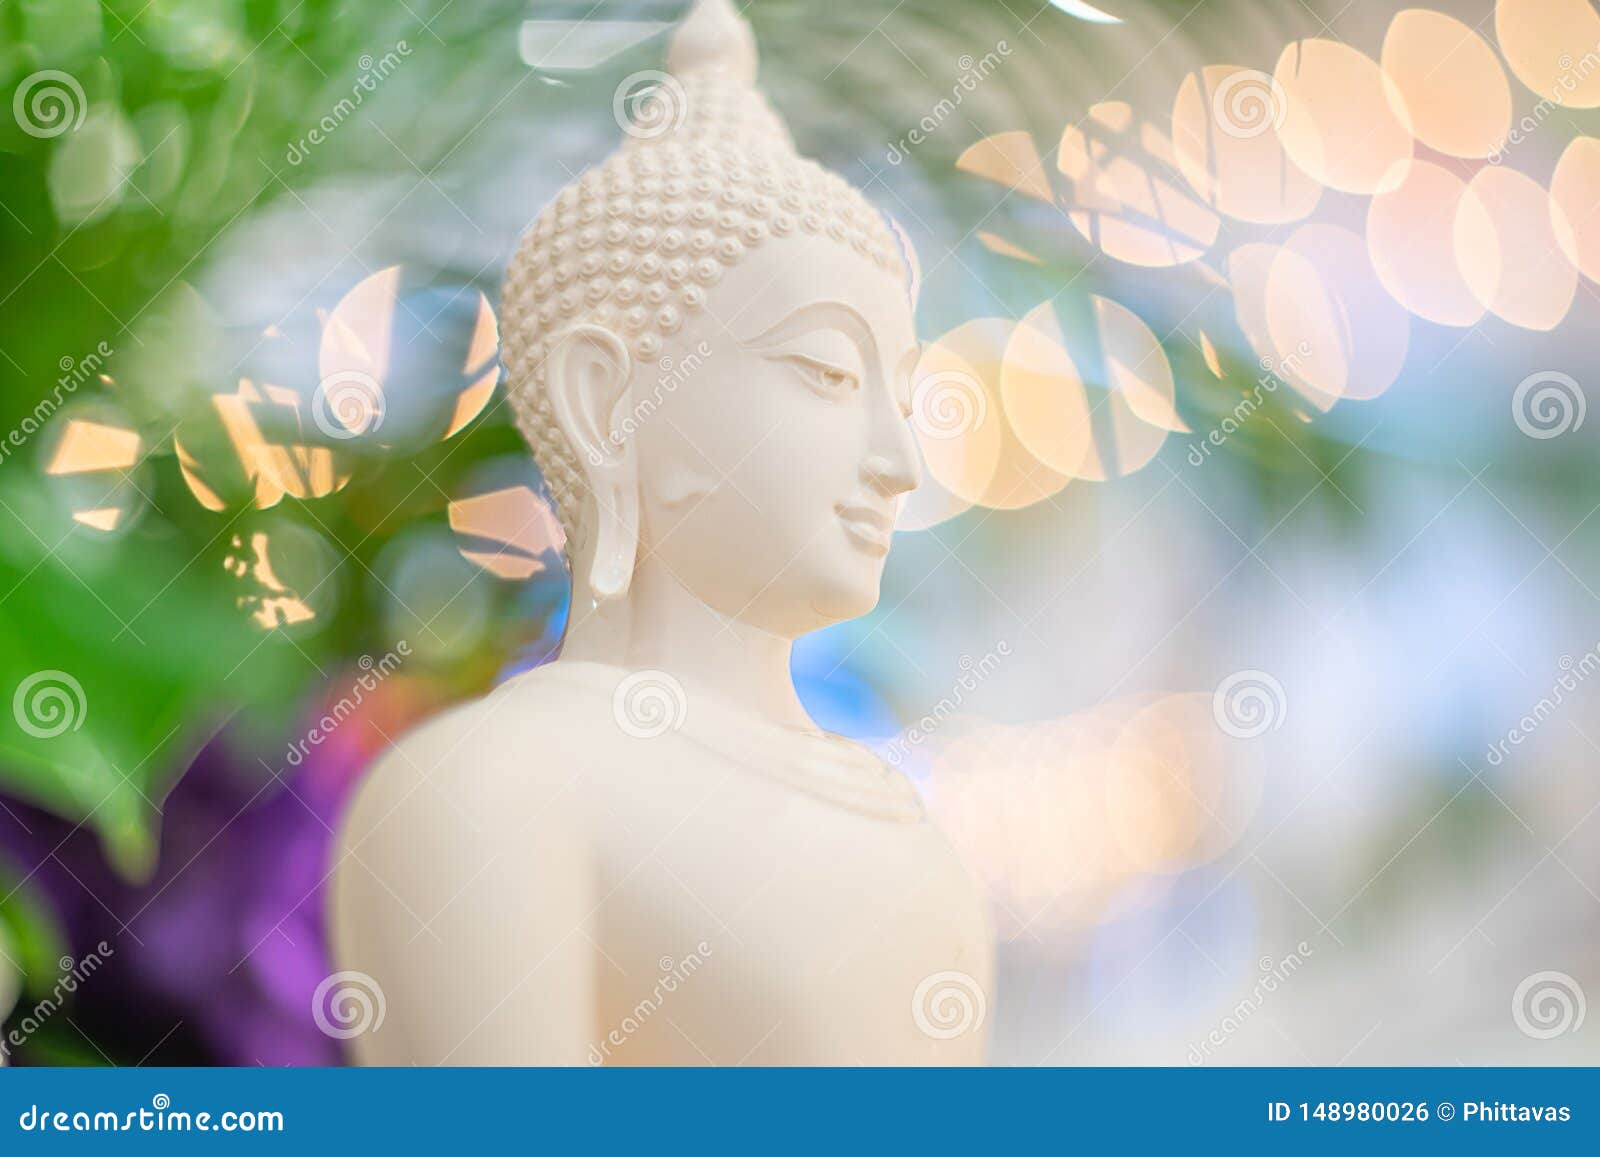 Sculpture White Buddha Over Beautiful Background Stock Photo ...